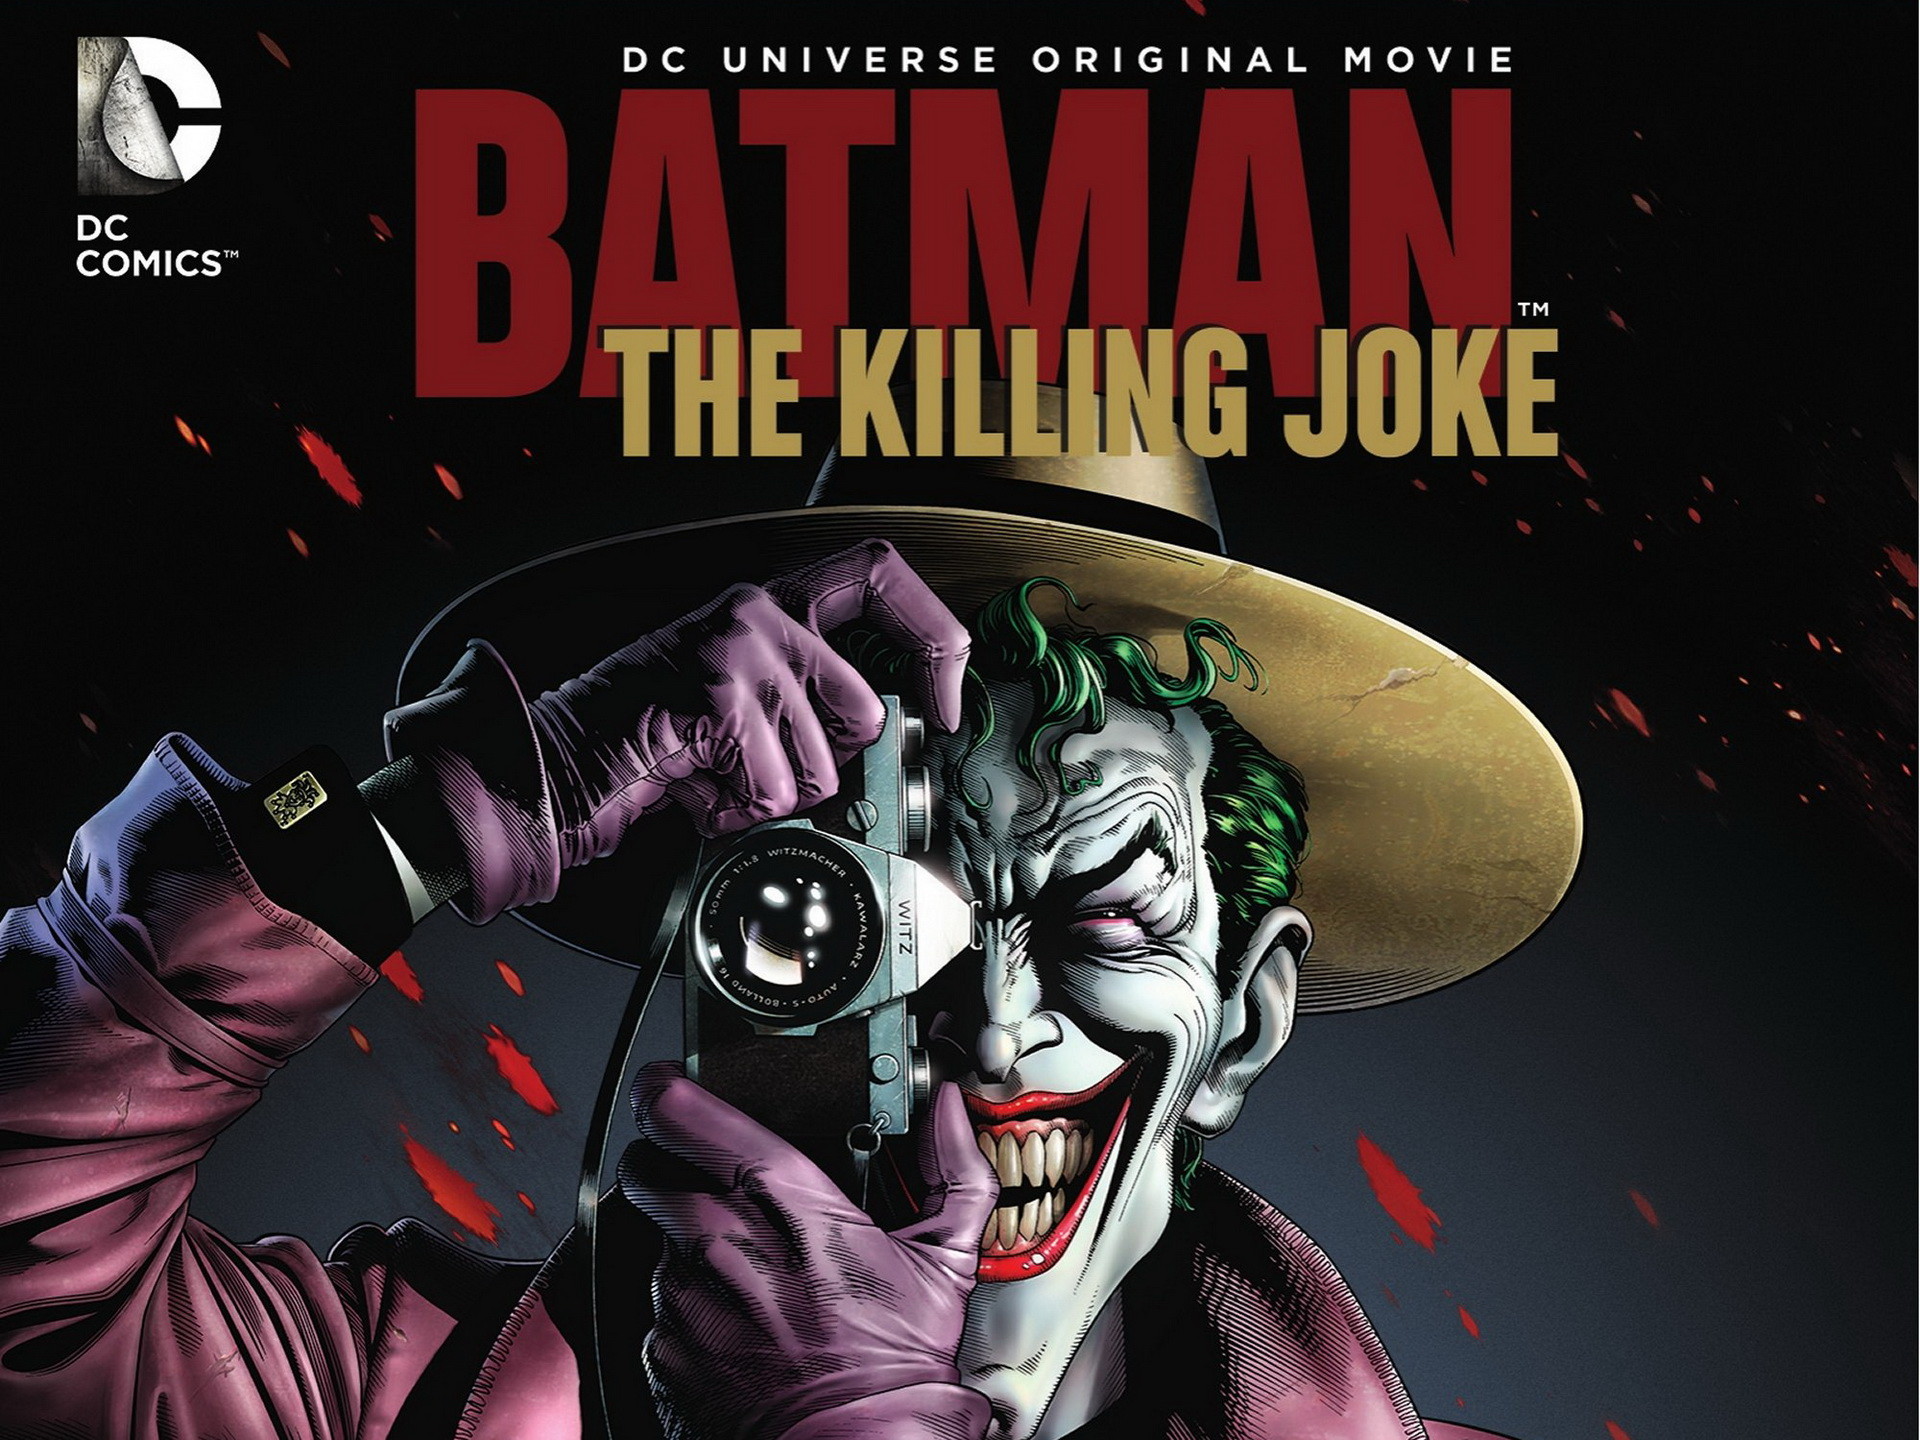 1920x1440 Batman the Killing Joke.  http://imgur.com/78QSxid ...